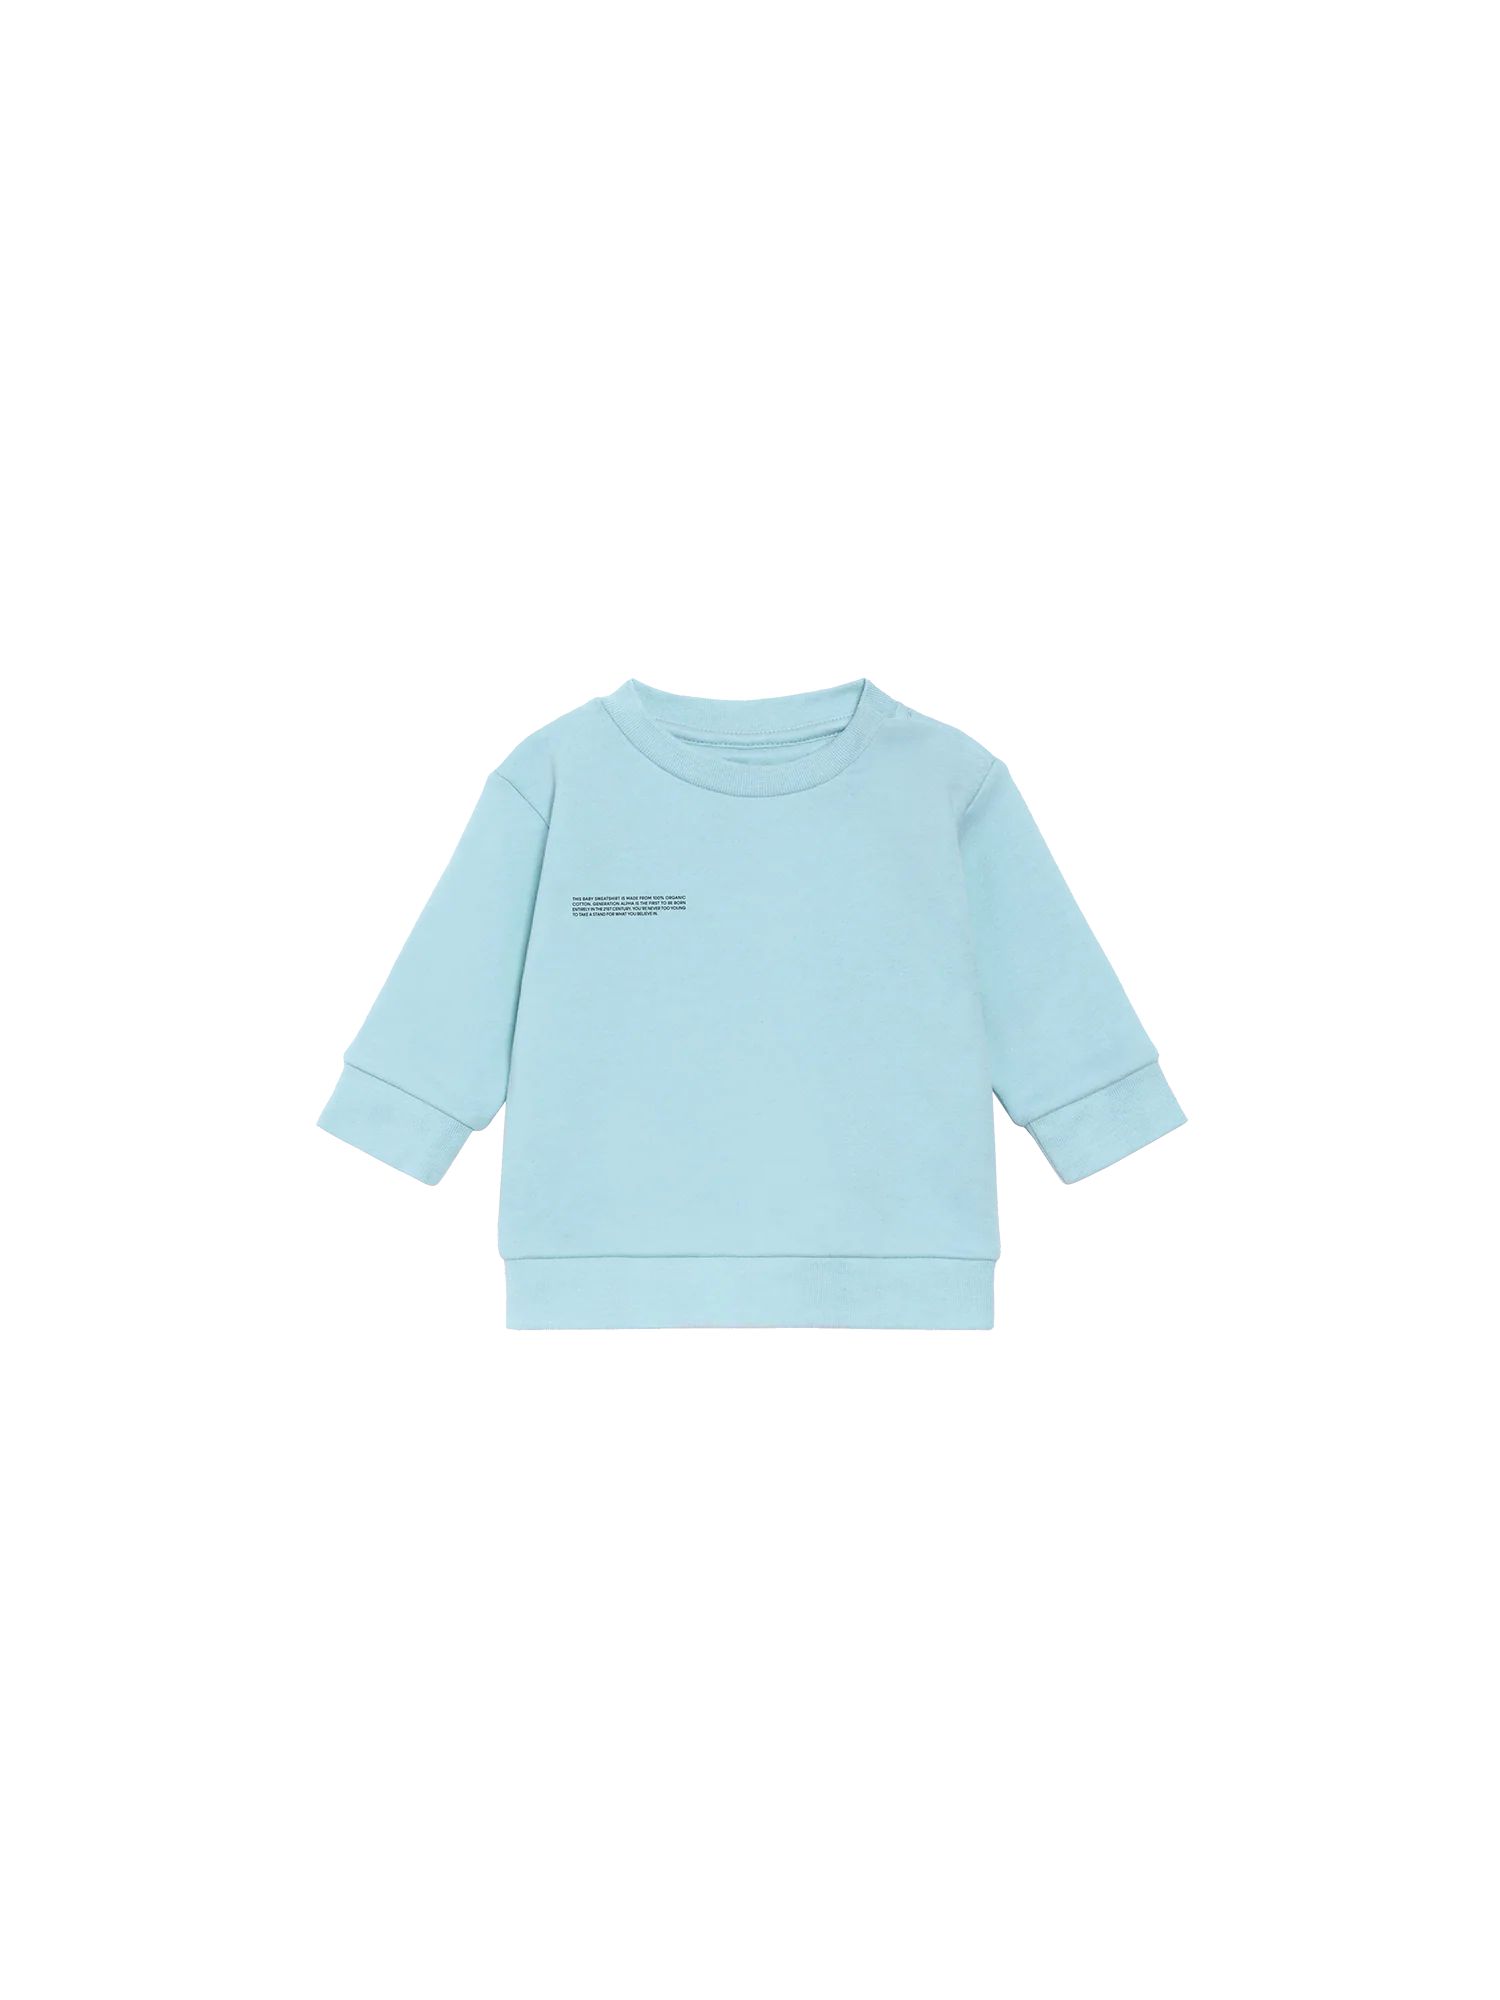 Baby 365 Sweatshirt - Celestial Blue - Pangaia | The Pangaia US